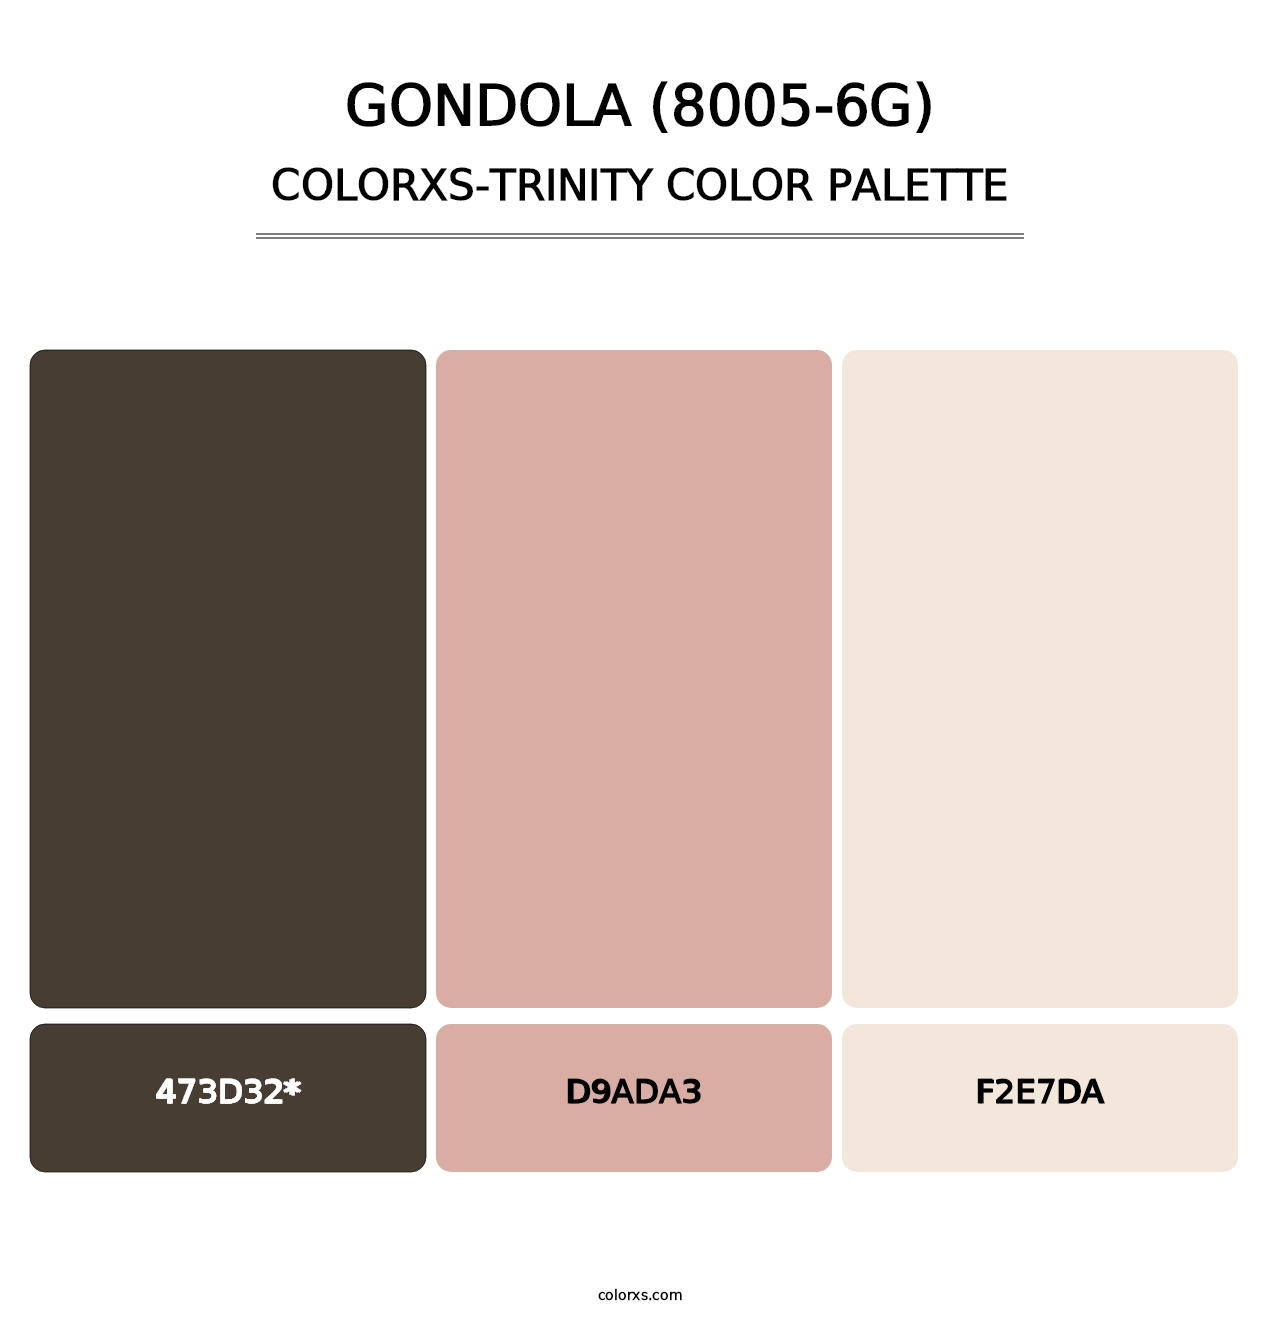 Gondola (8005-6G) - Colorxs Trinity Palette